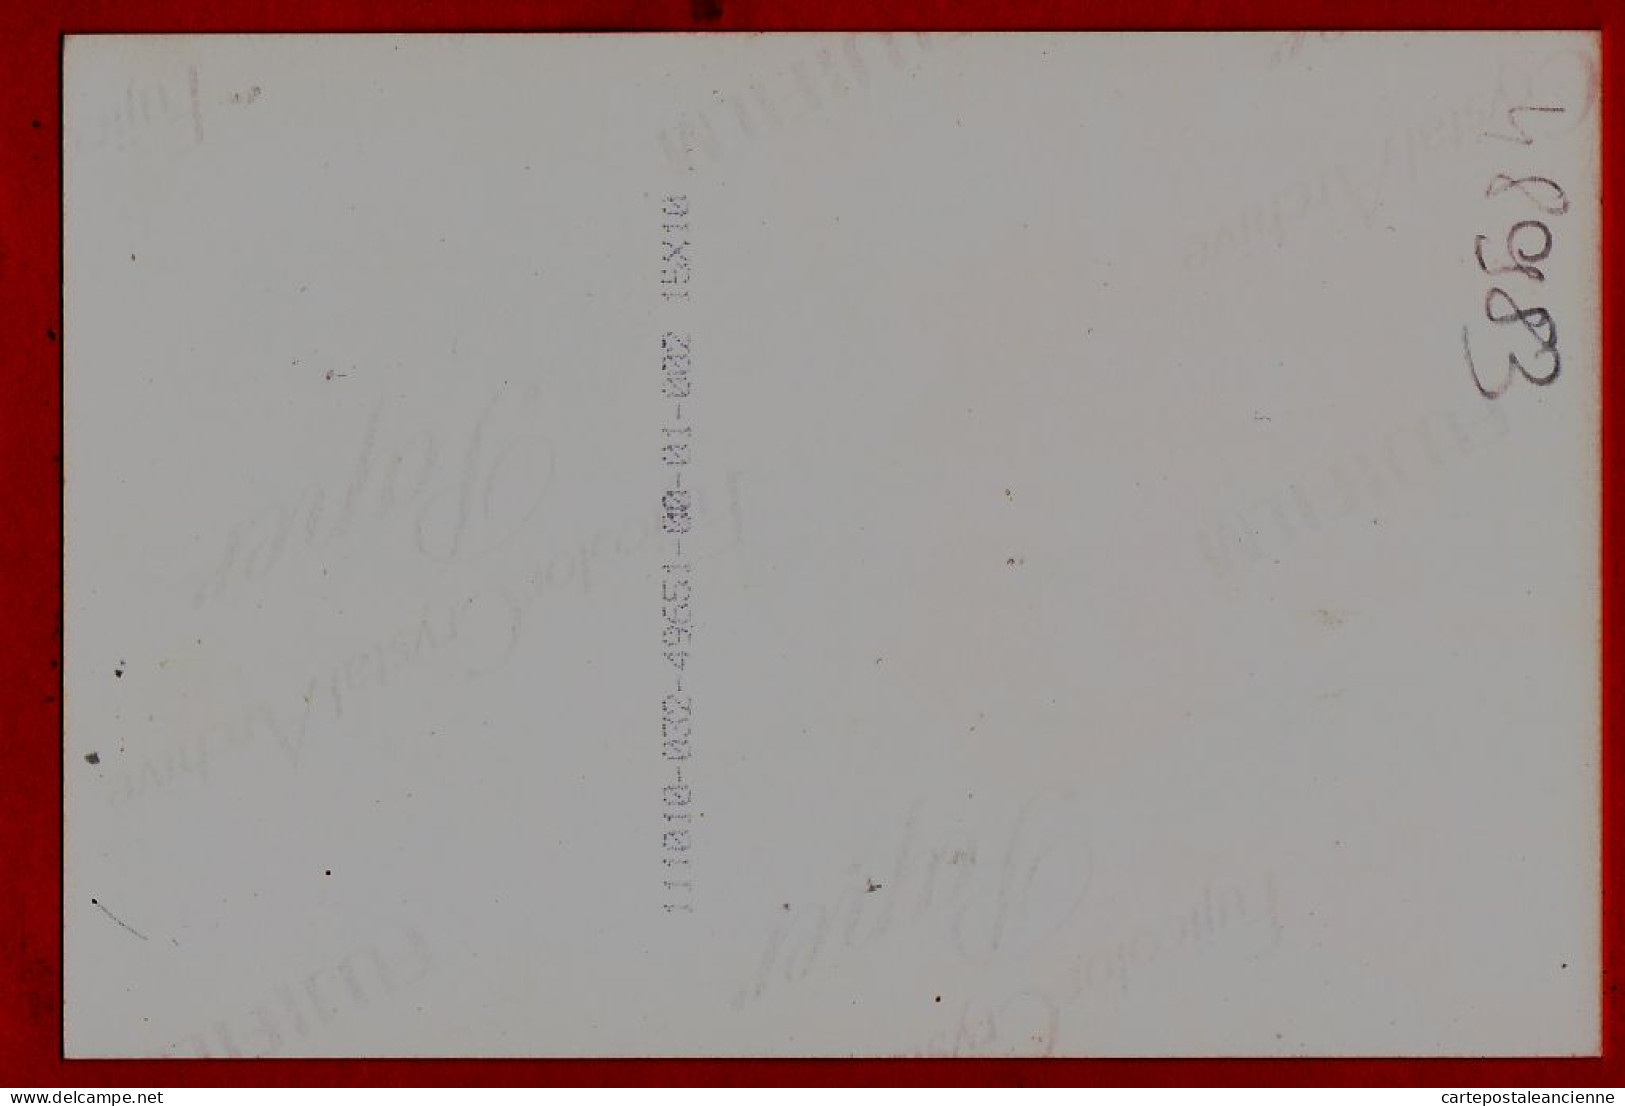 05234 ● SYLVIE VARTAN Tee-shirt Aigle Américain 1985s Photographie Sur Papier Fujifilm 10x15cm - Sänger Und Musikanten